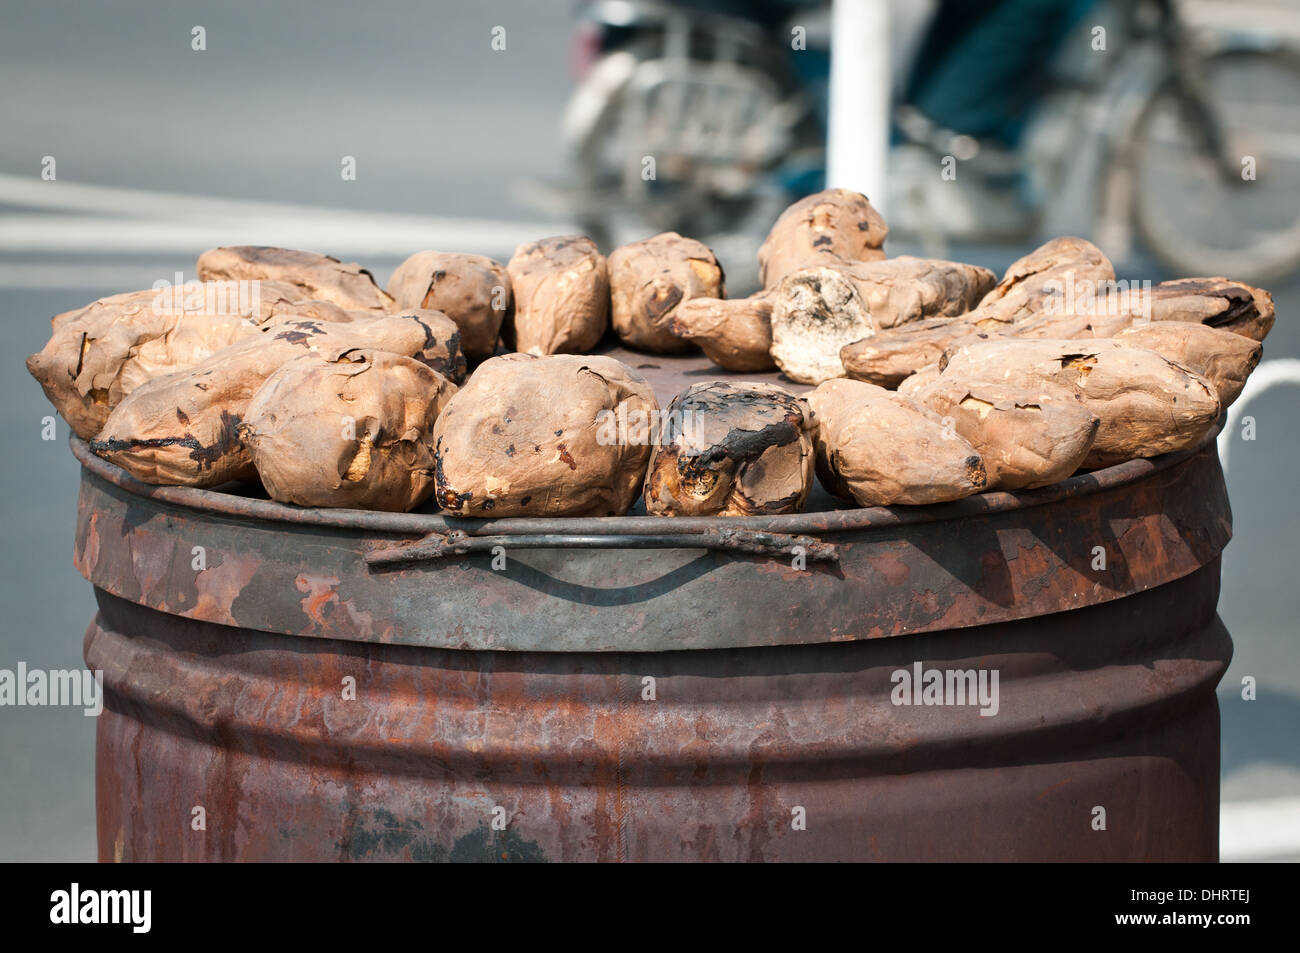 Roasted sweet potatoes - popular street food in Beijing, China Stock Photo